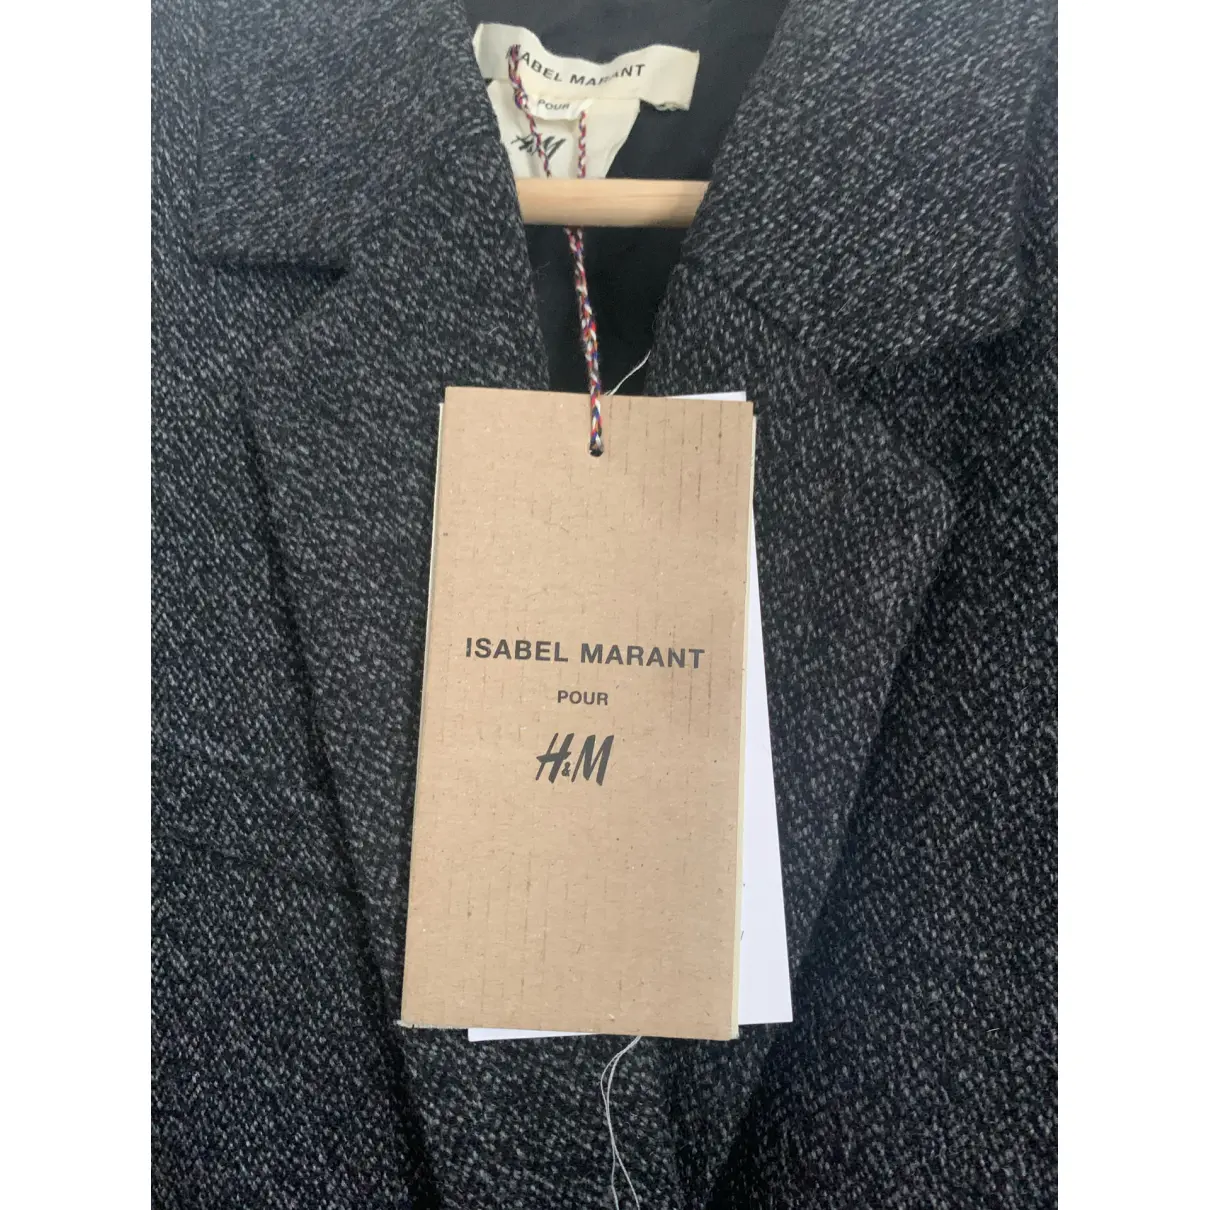 Buy Isabel Marant Pour H&M Wool peacoat online